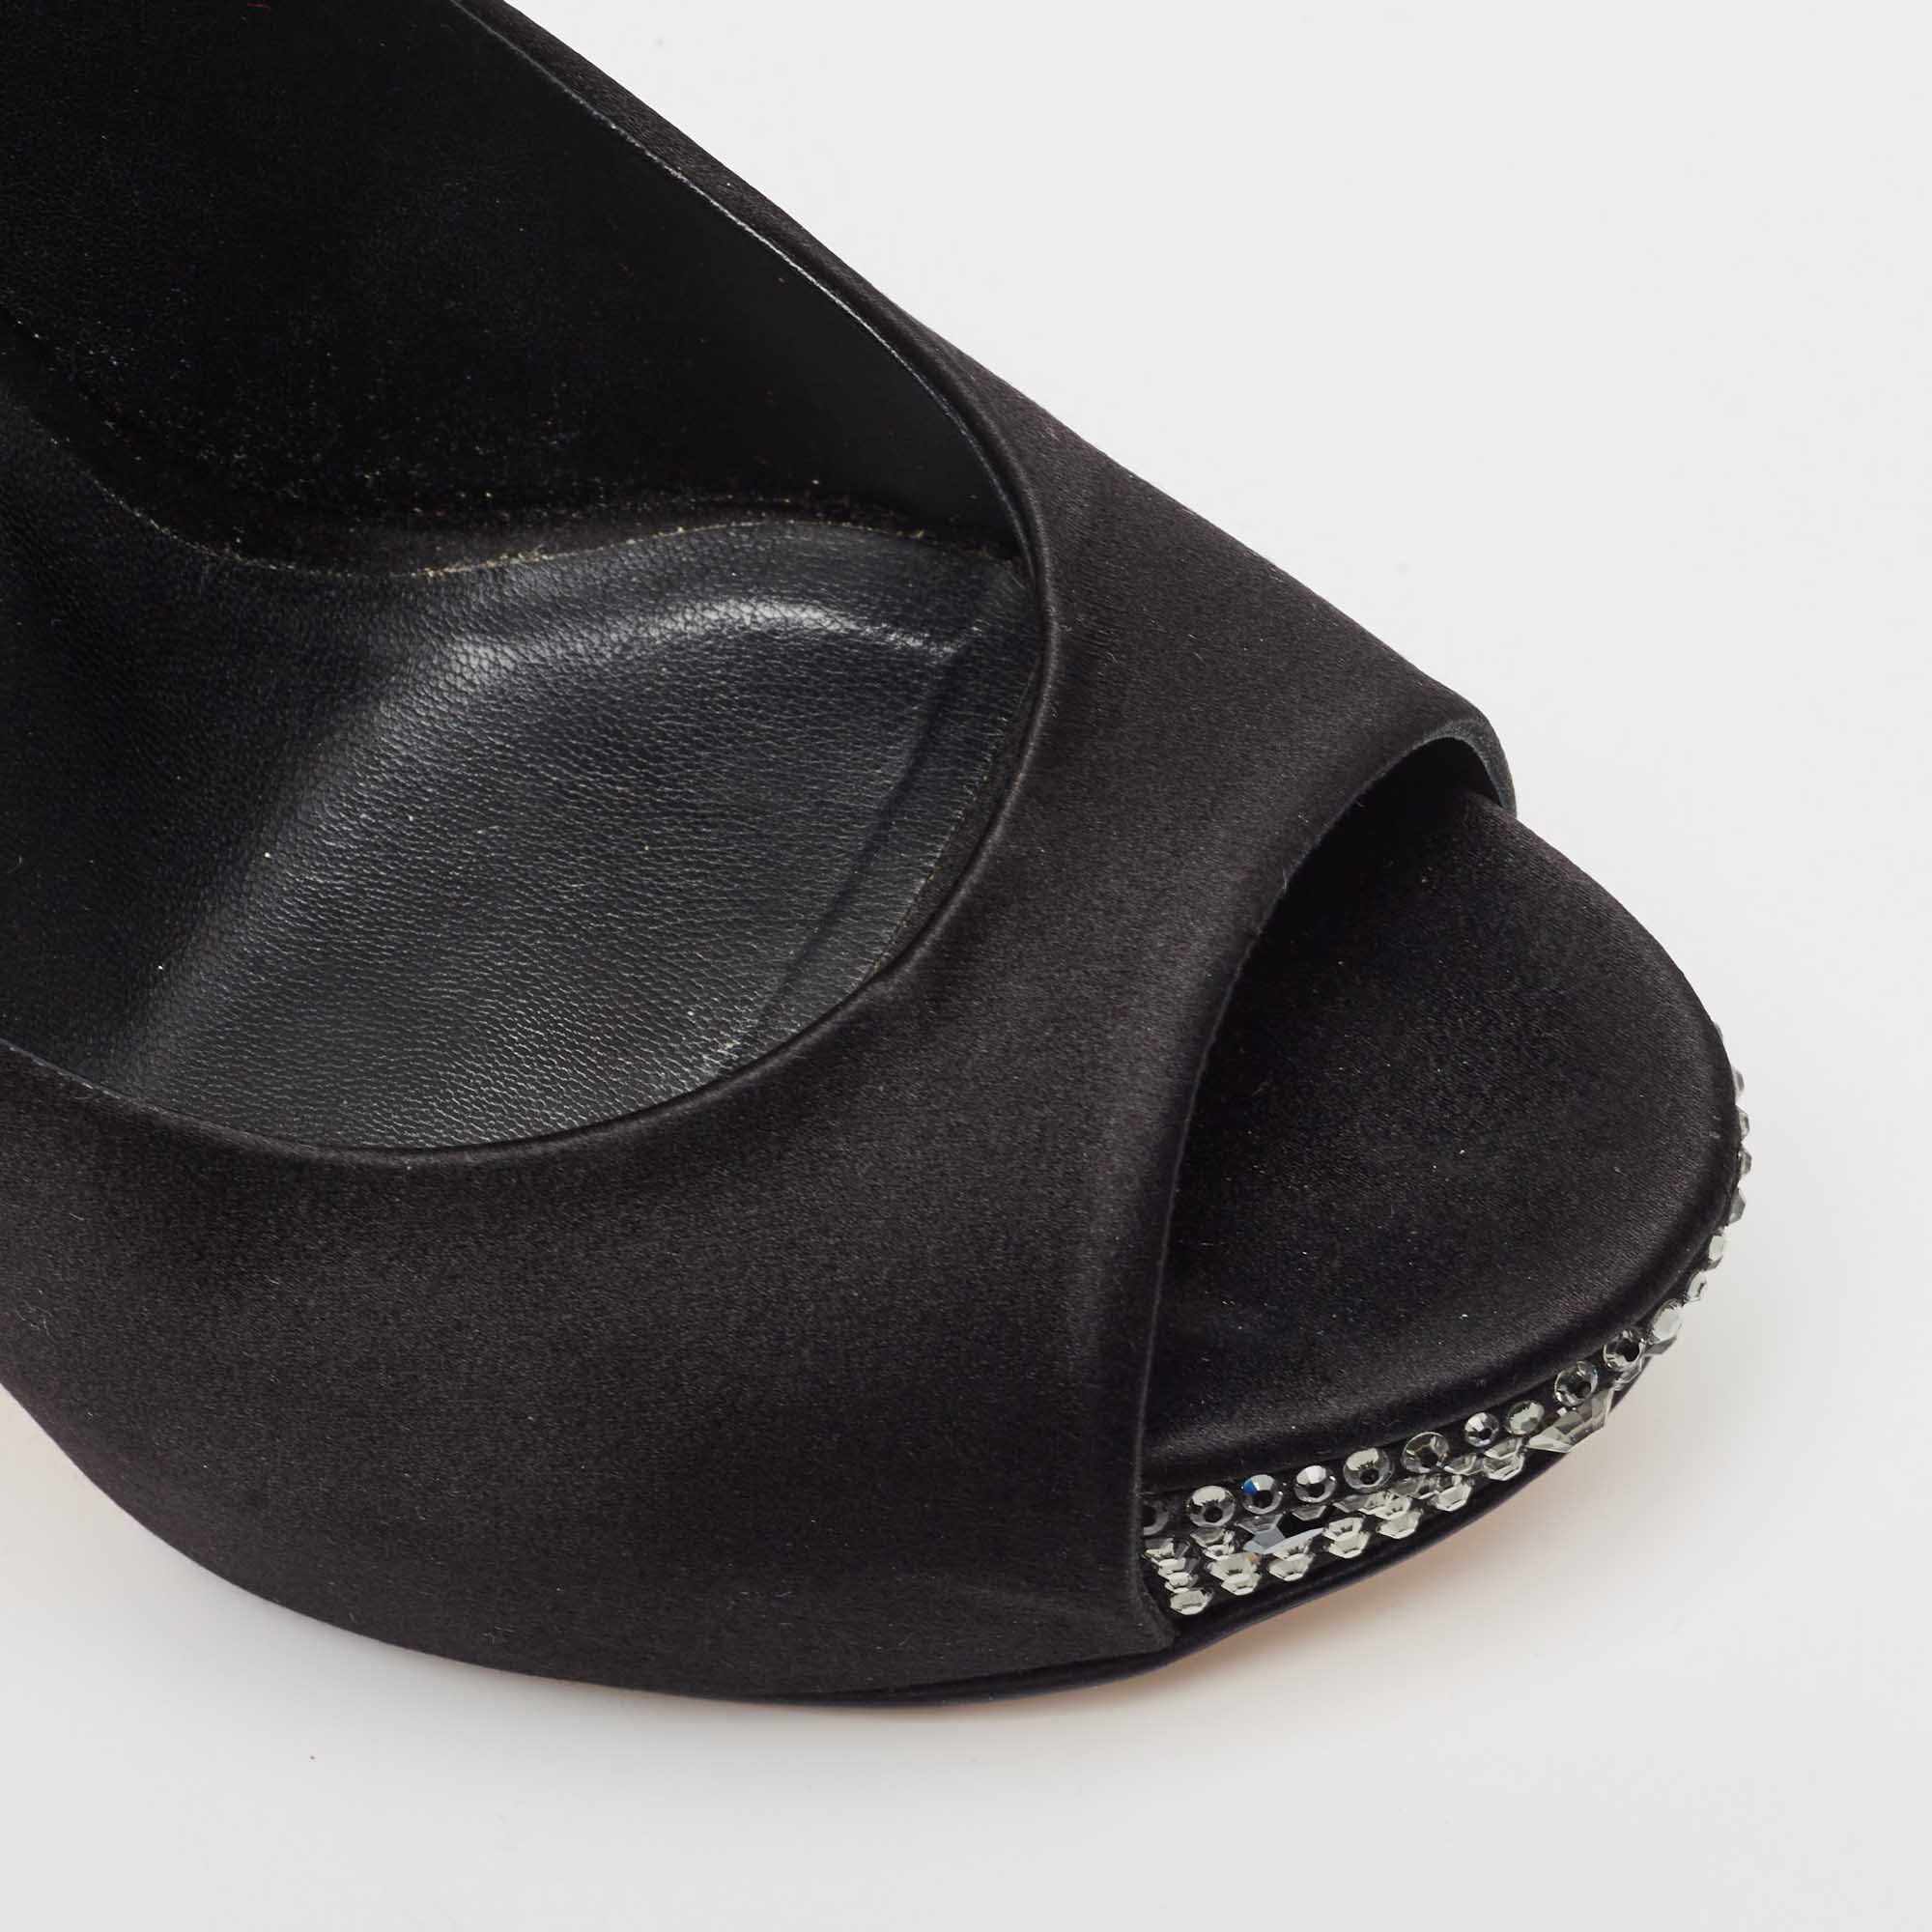 Gina Black Satin Jenna Crystal Embellished Heel Peep Toe Platform Pumps Size 39.5